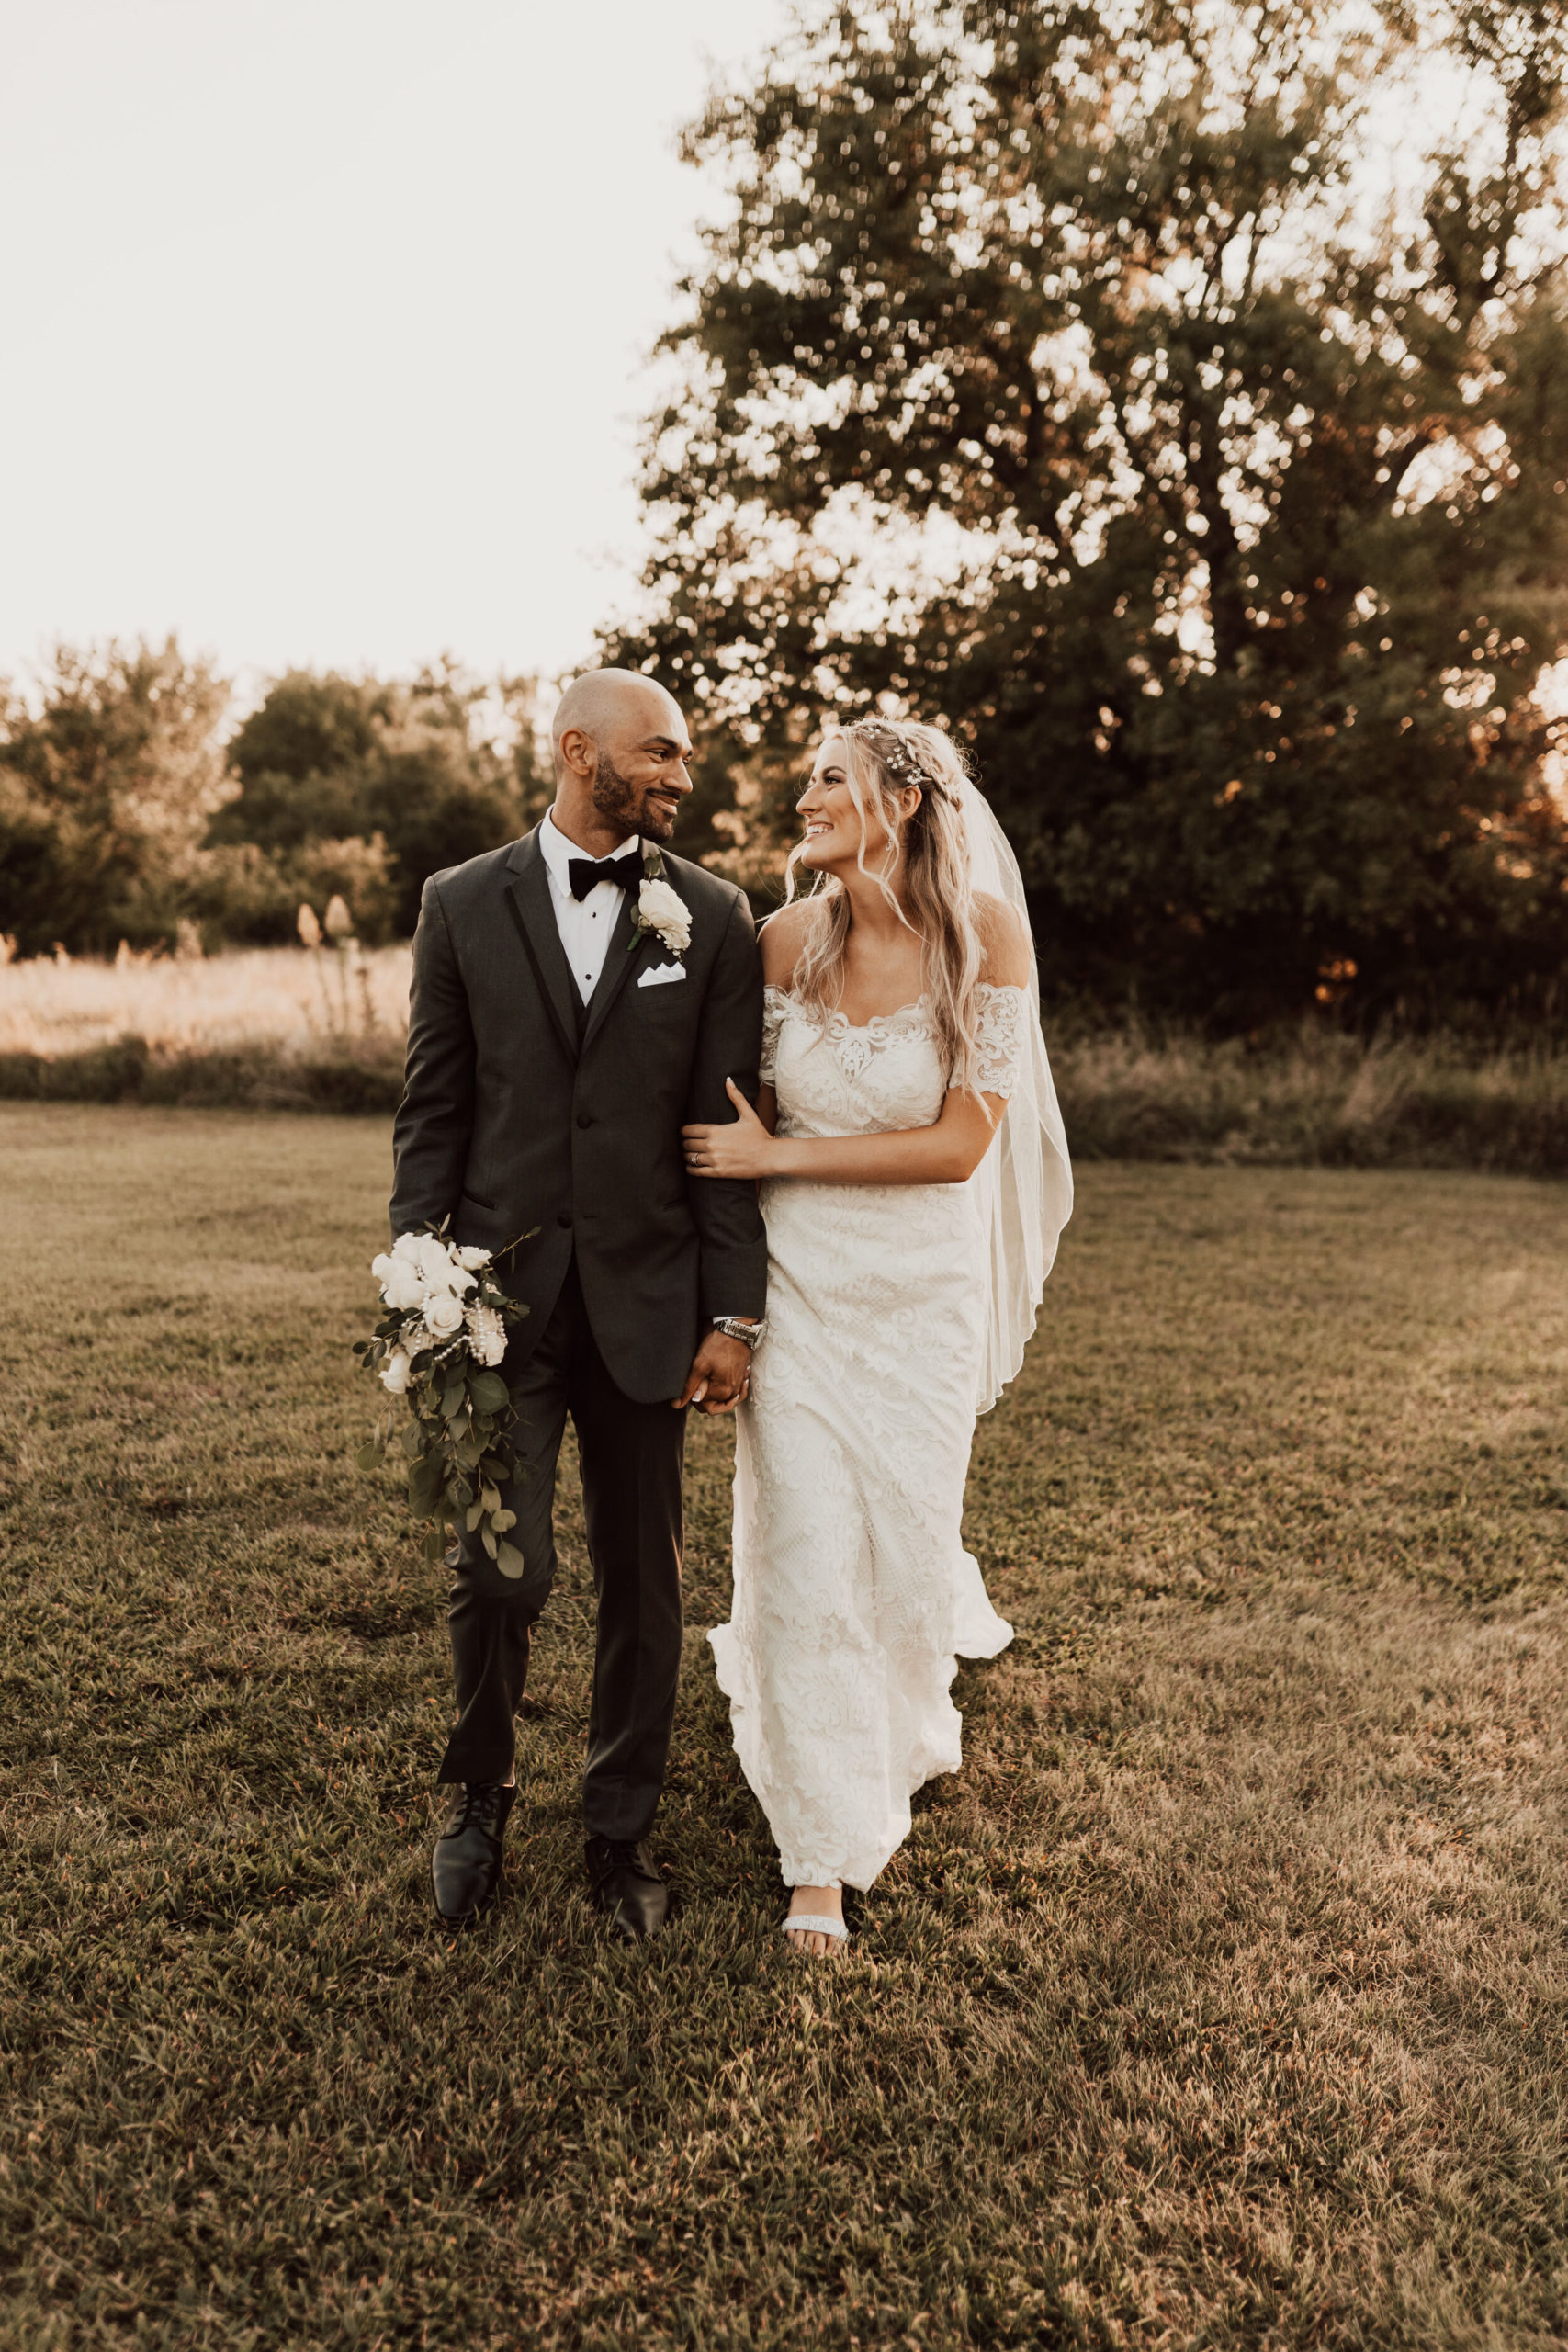 Hayley + Lorenzo - Summer White Chapel Wedding at Stone Hill Barn in Augusta, Kansas201.jpg